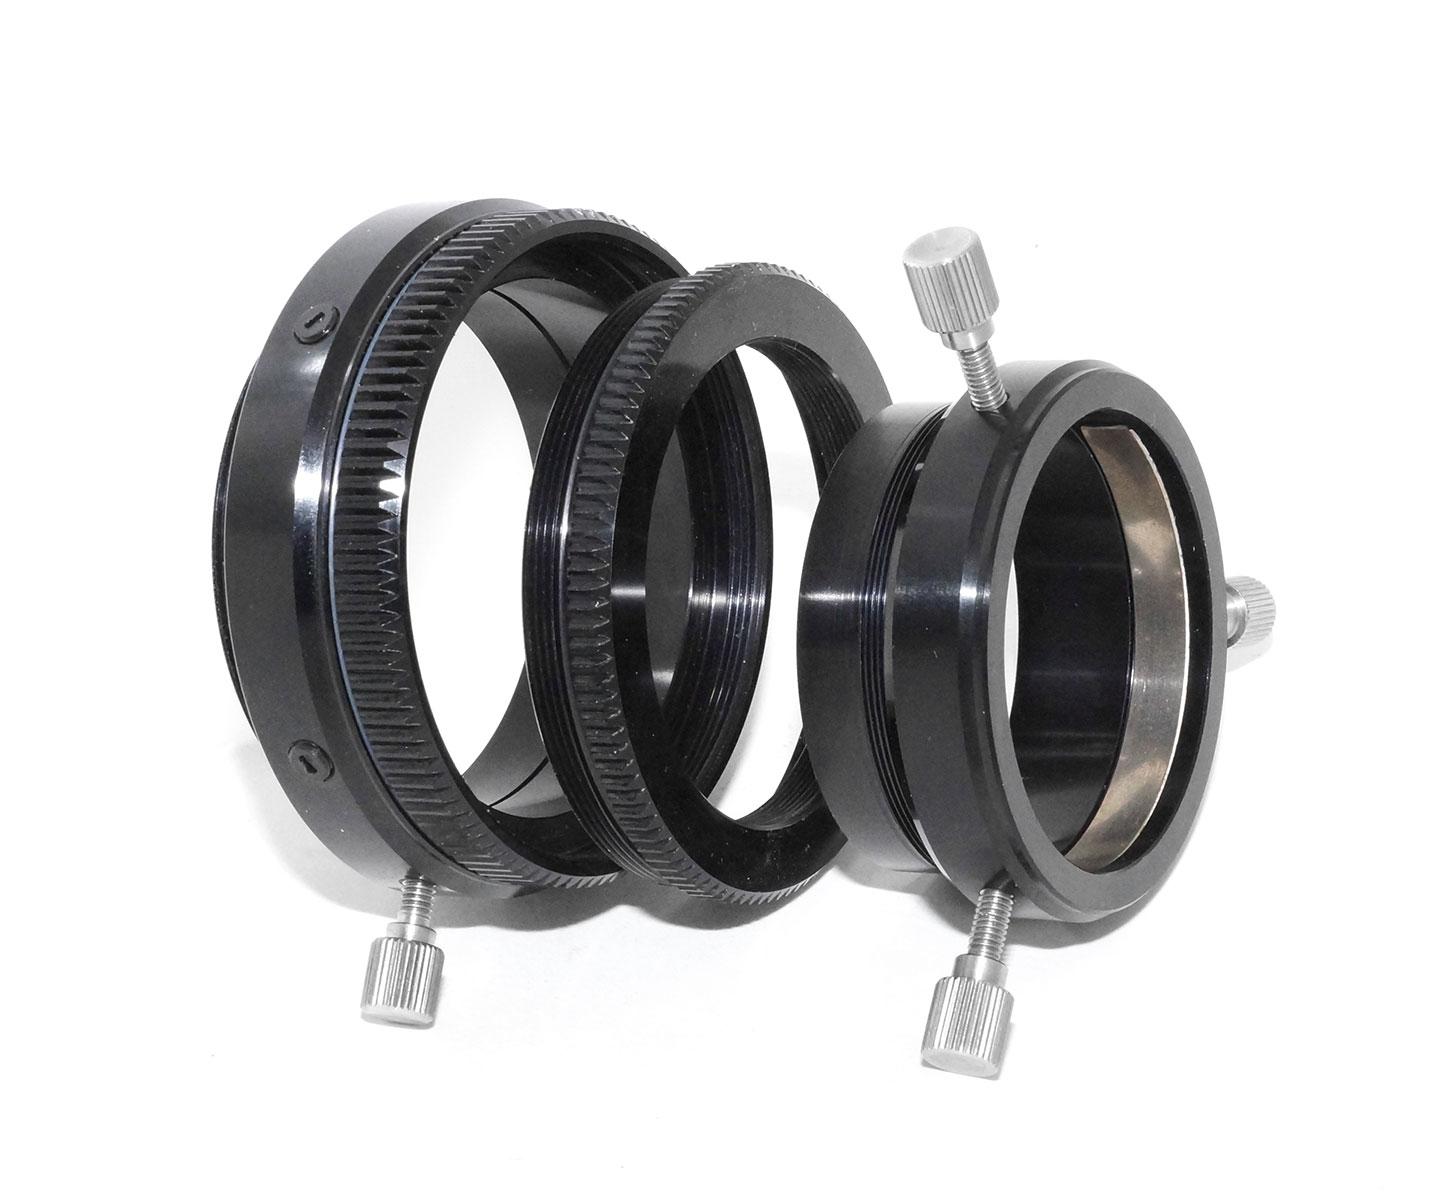    TS-Optics 360° Rotation &amp; Thread Adapter - M63 to M68, M54 and 2"  [EN]  